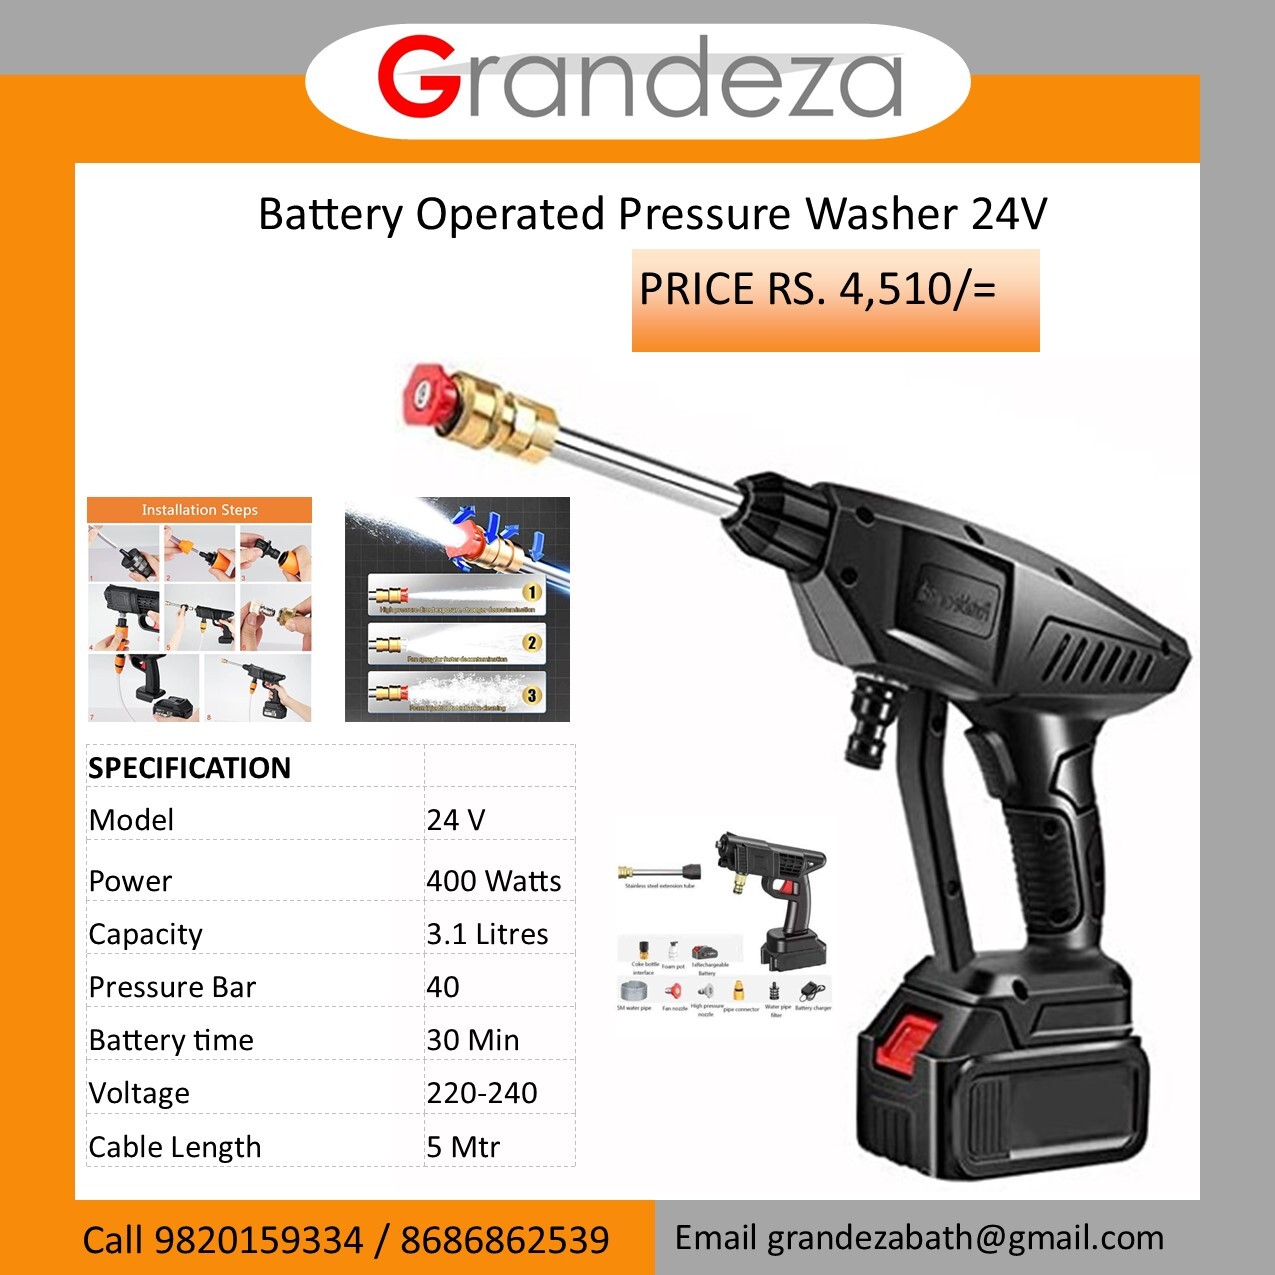 GRANDEZA Battery Operated Pressure Washer 24V